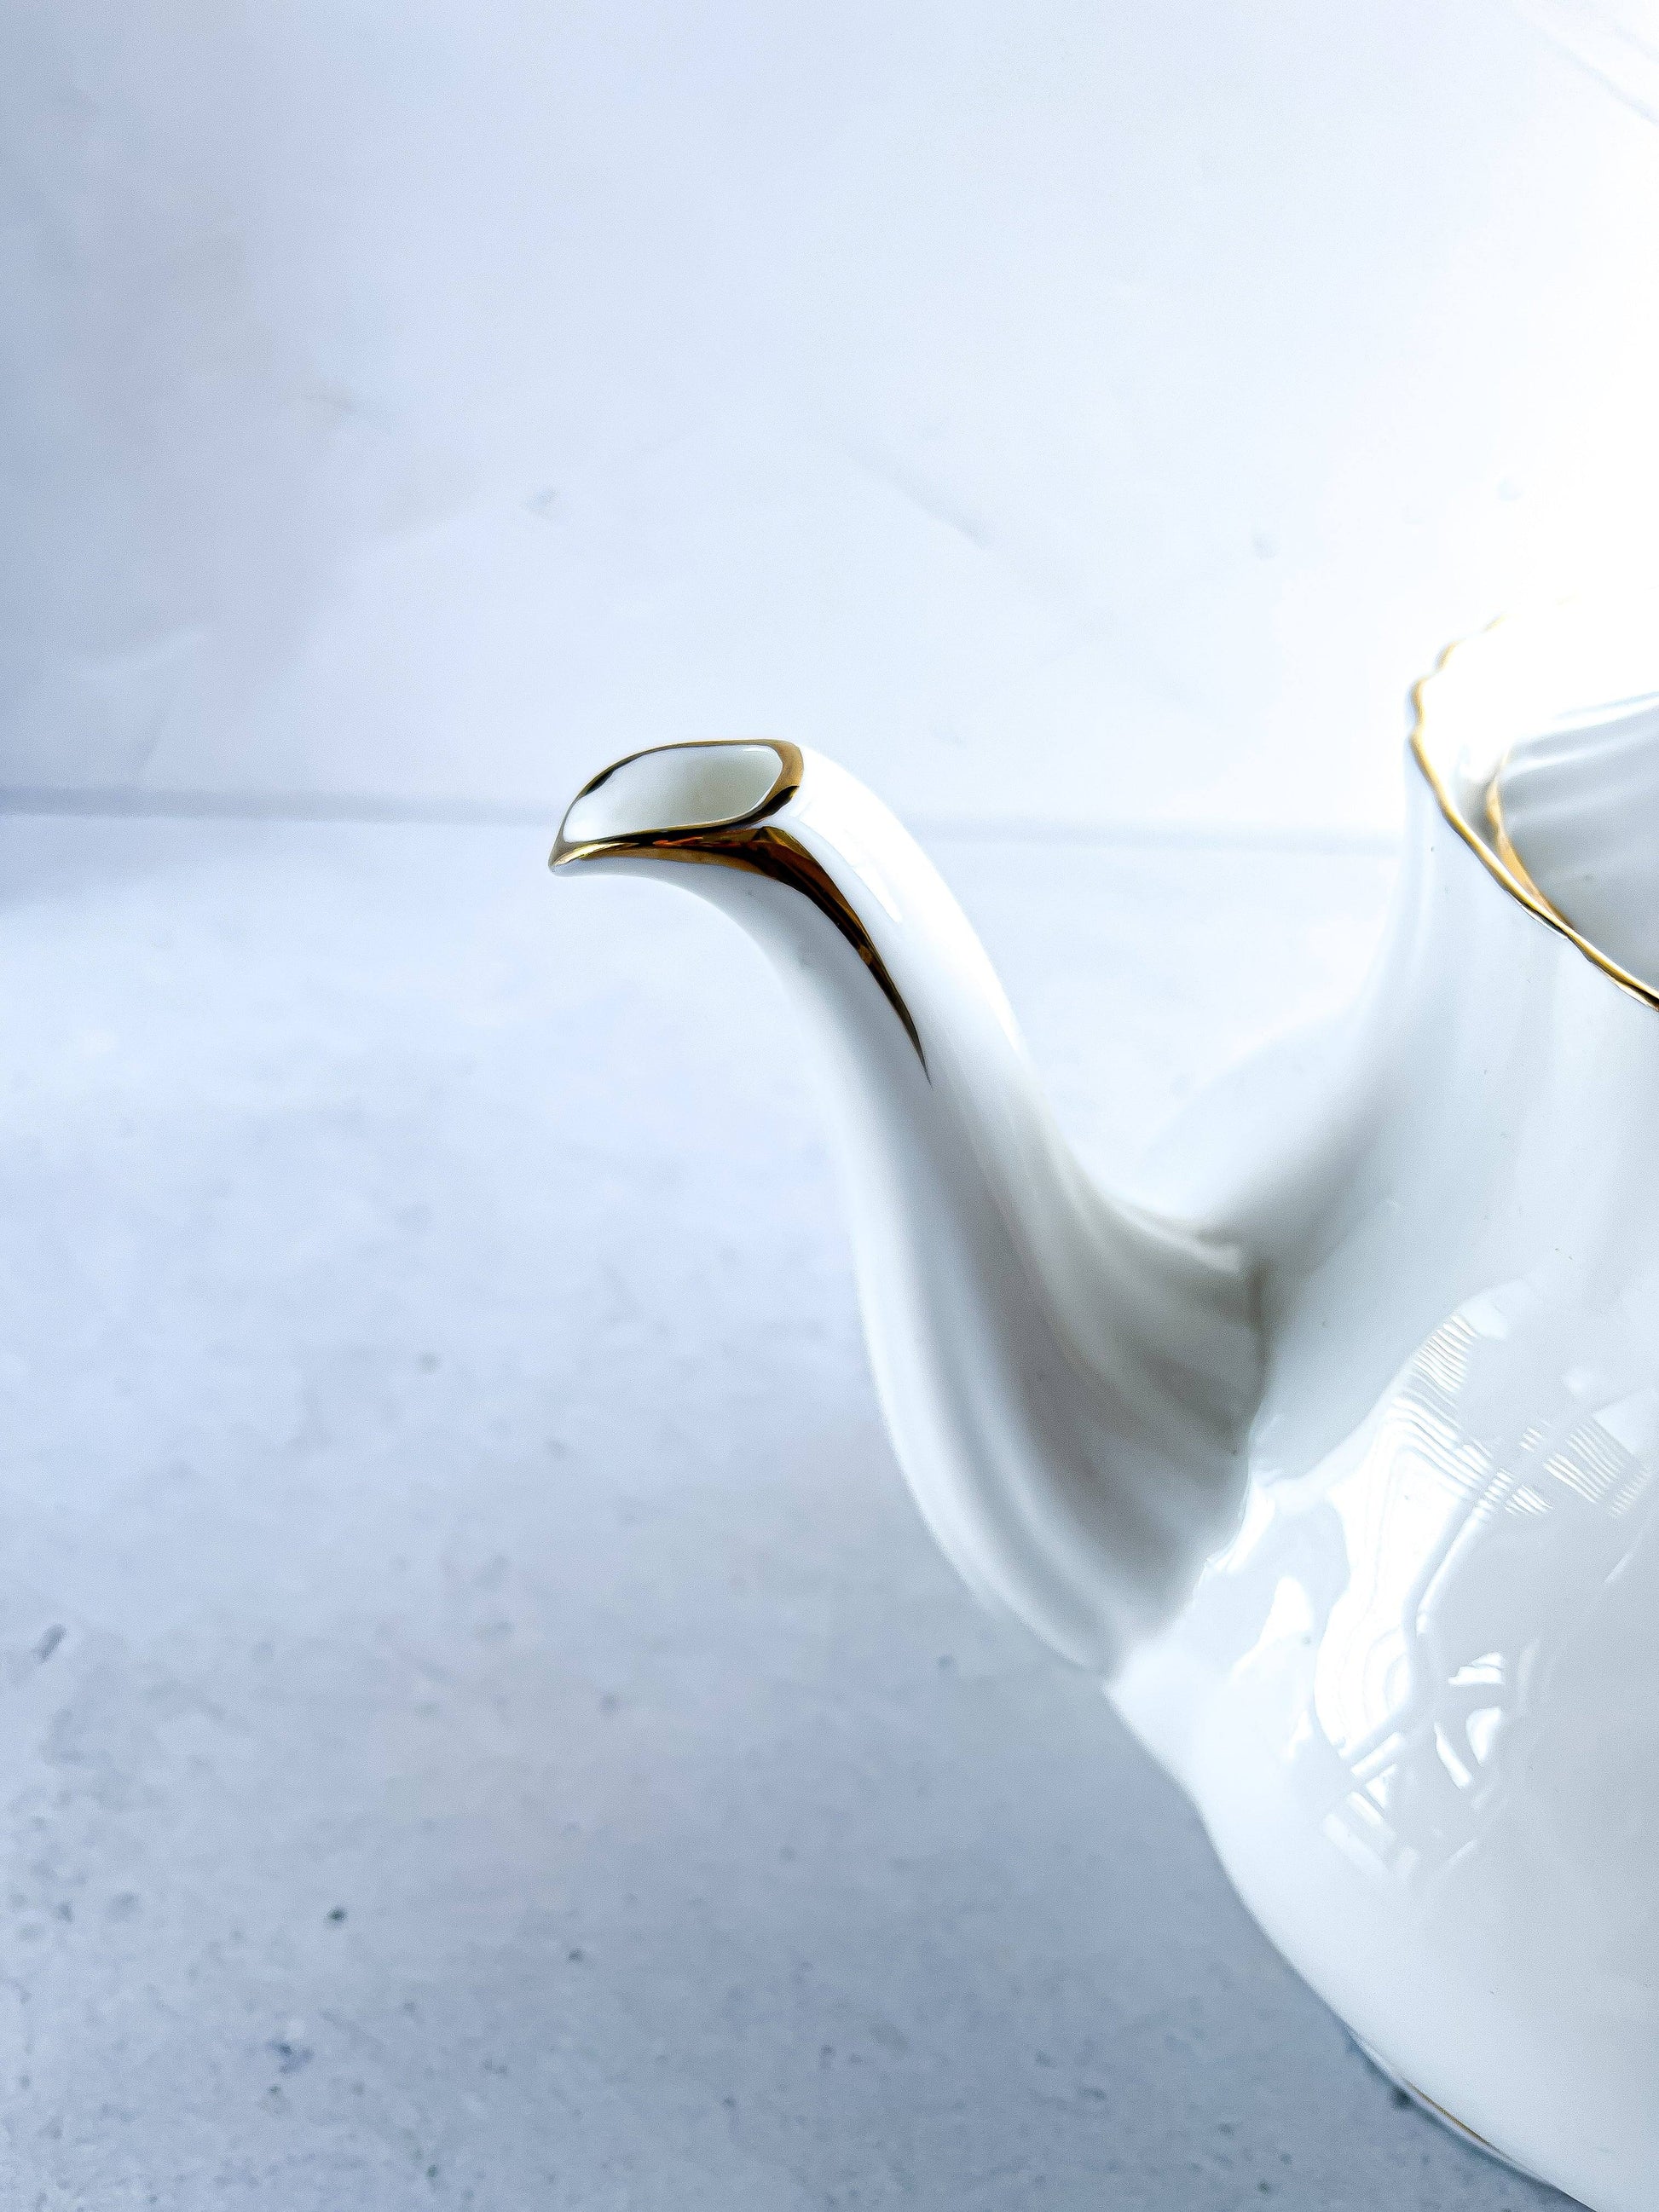 Royal Albert Teapot - 'Val D'or' Collection - SOSC Home